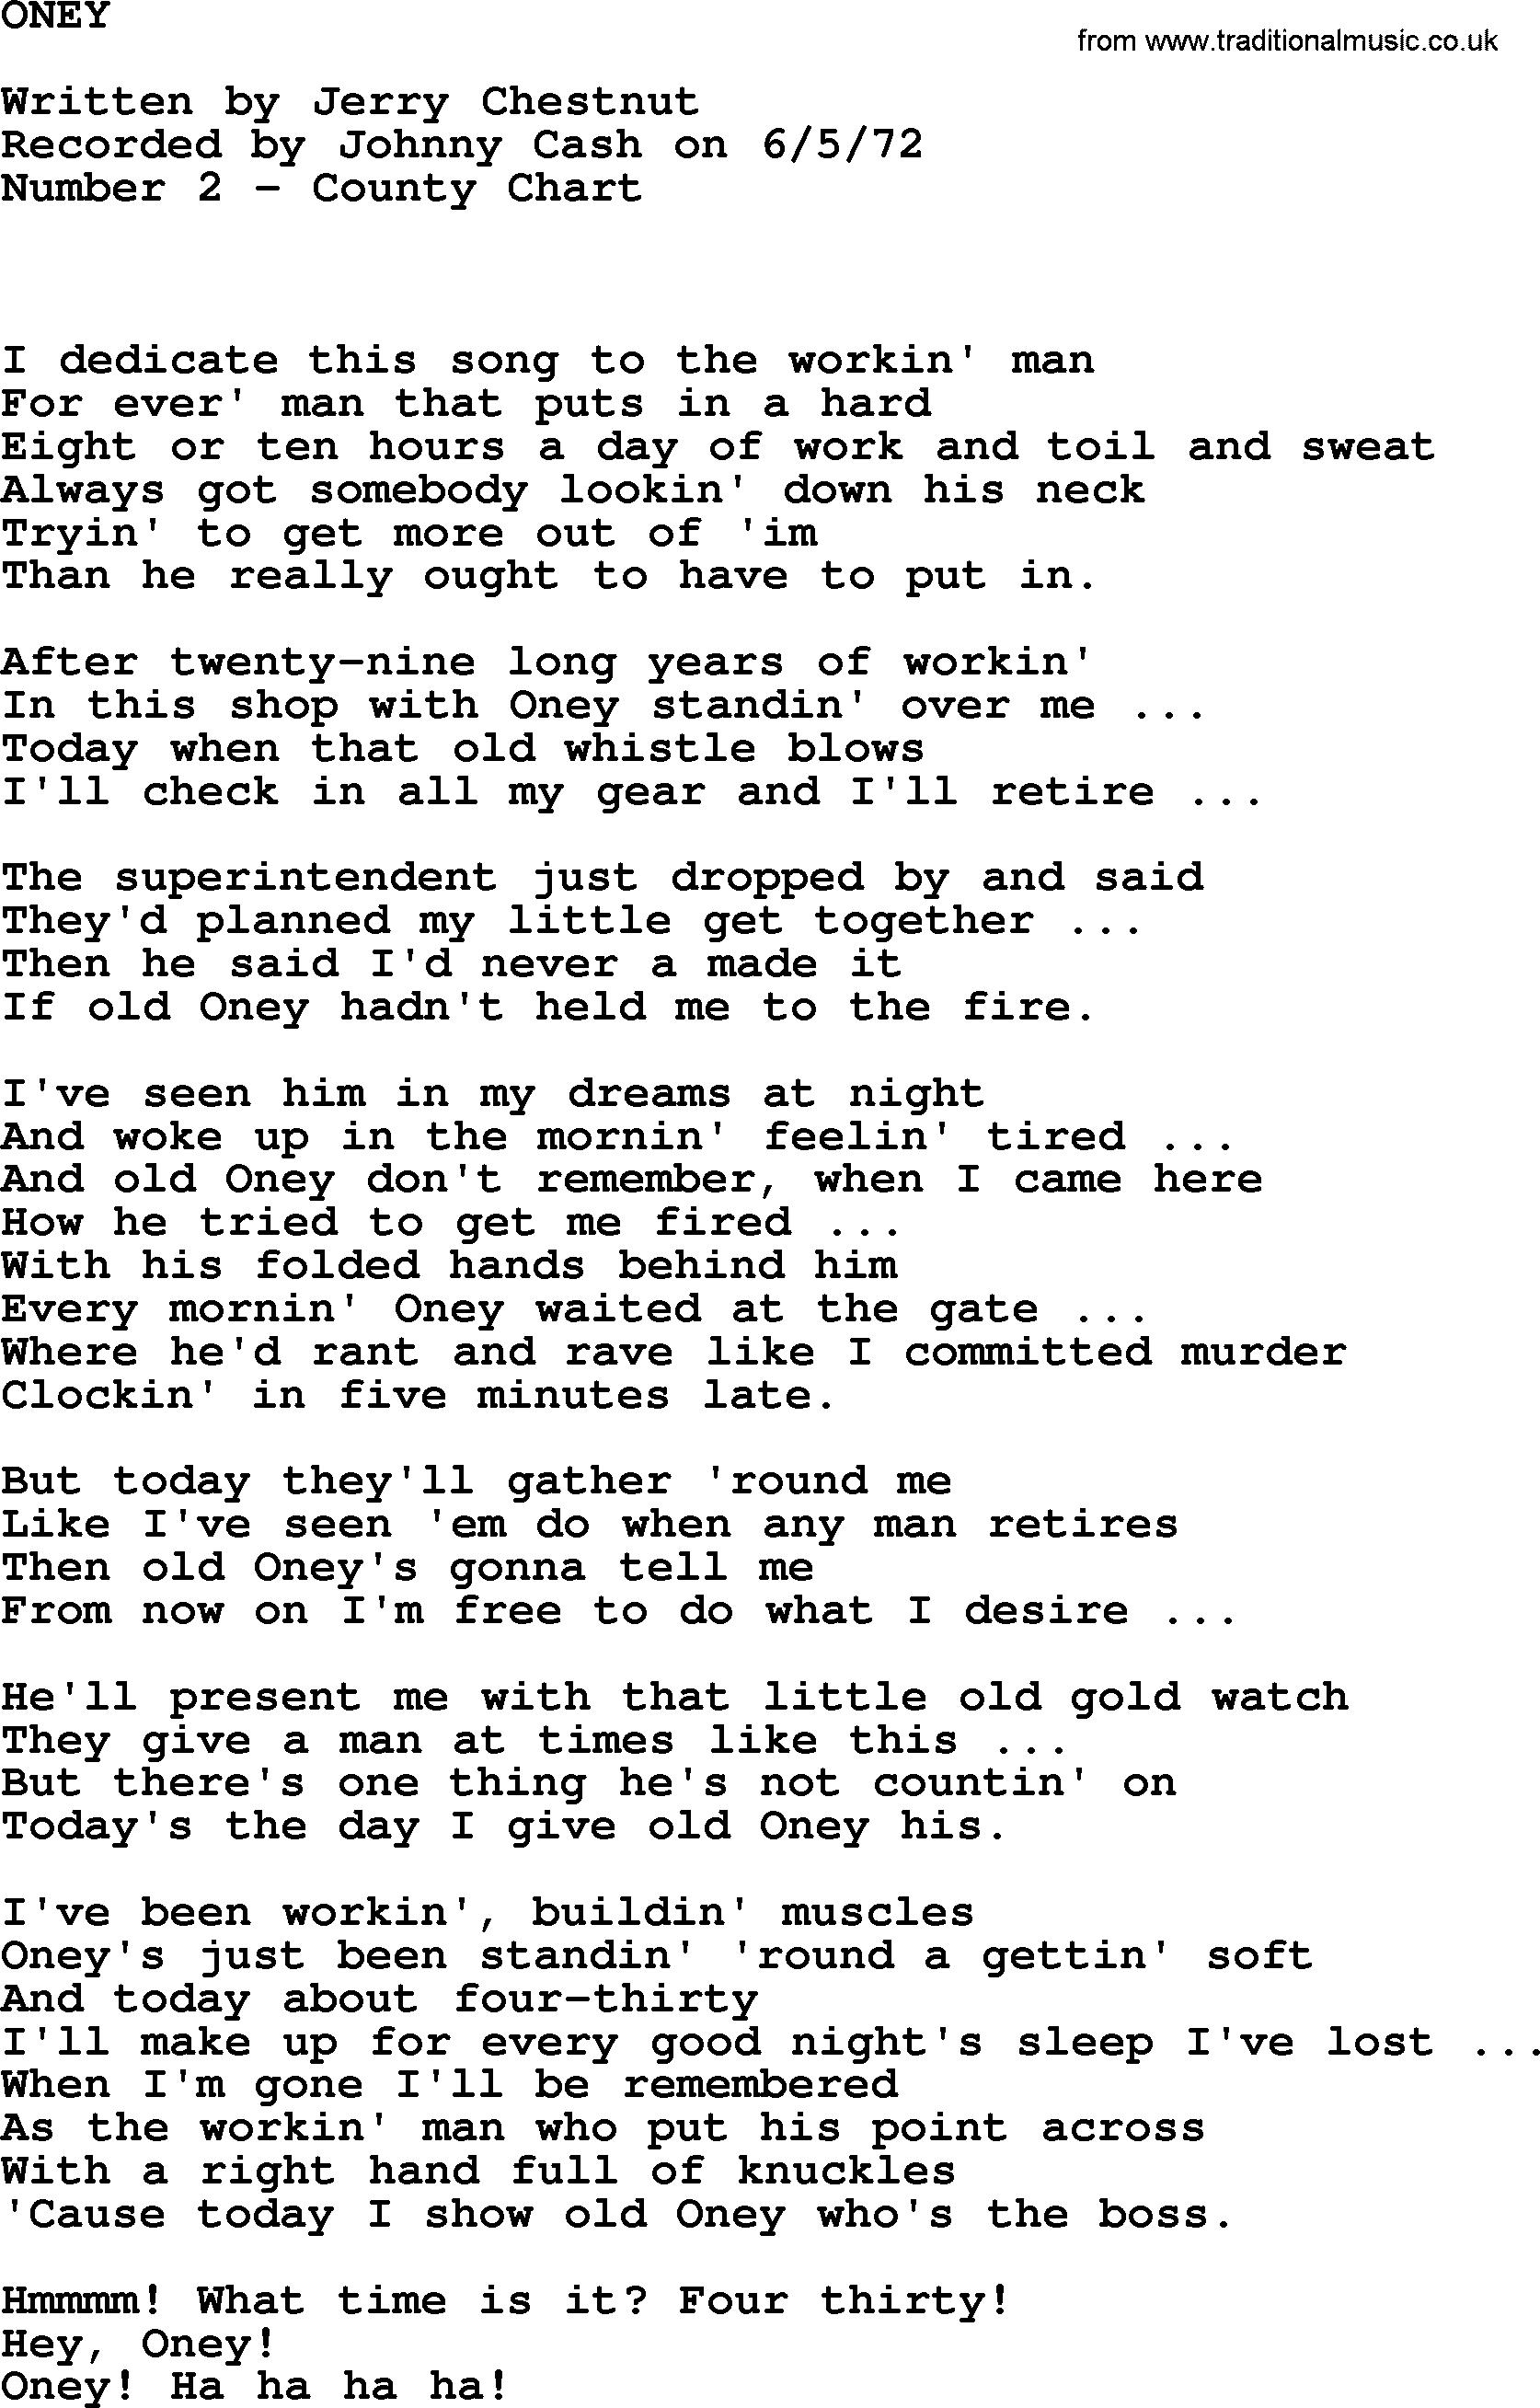 Johnny Cash song Oney.txt lyrics